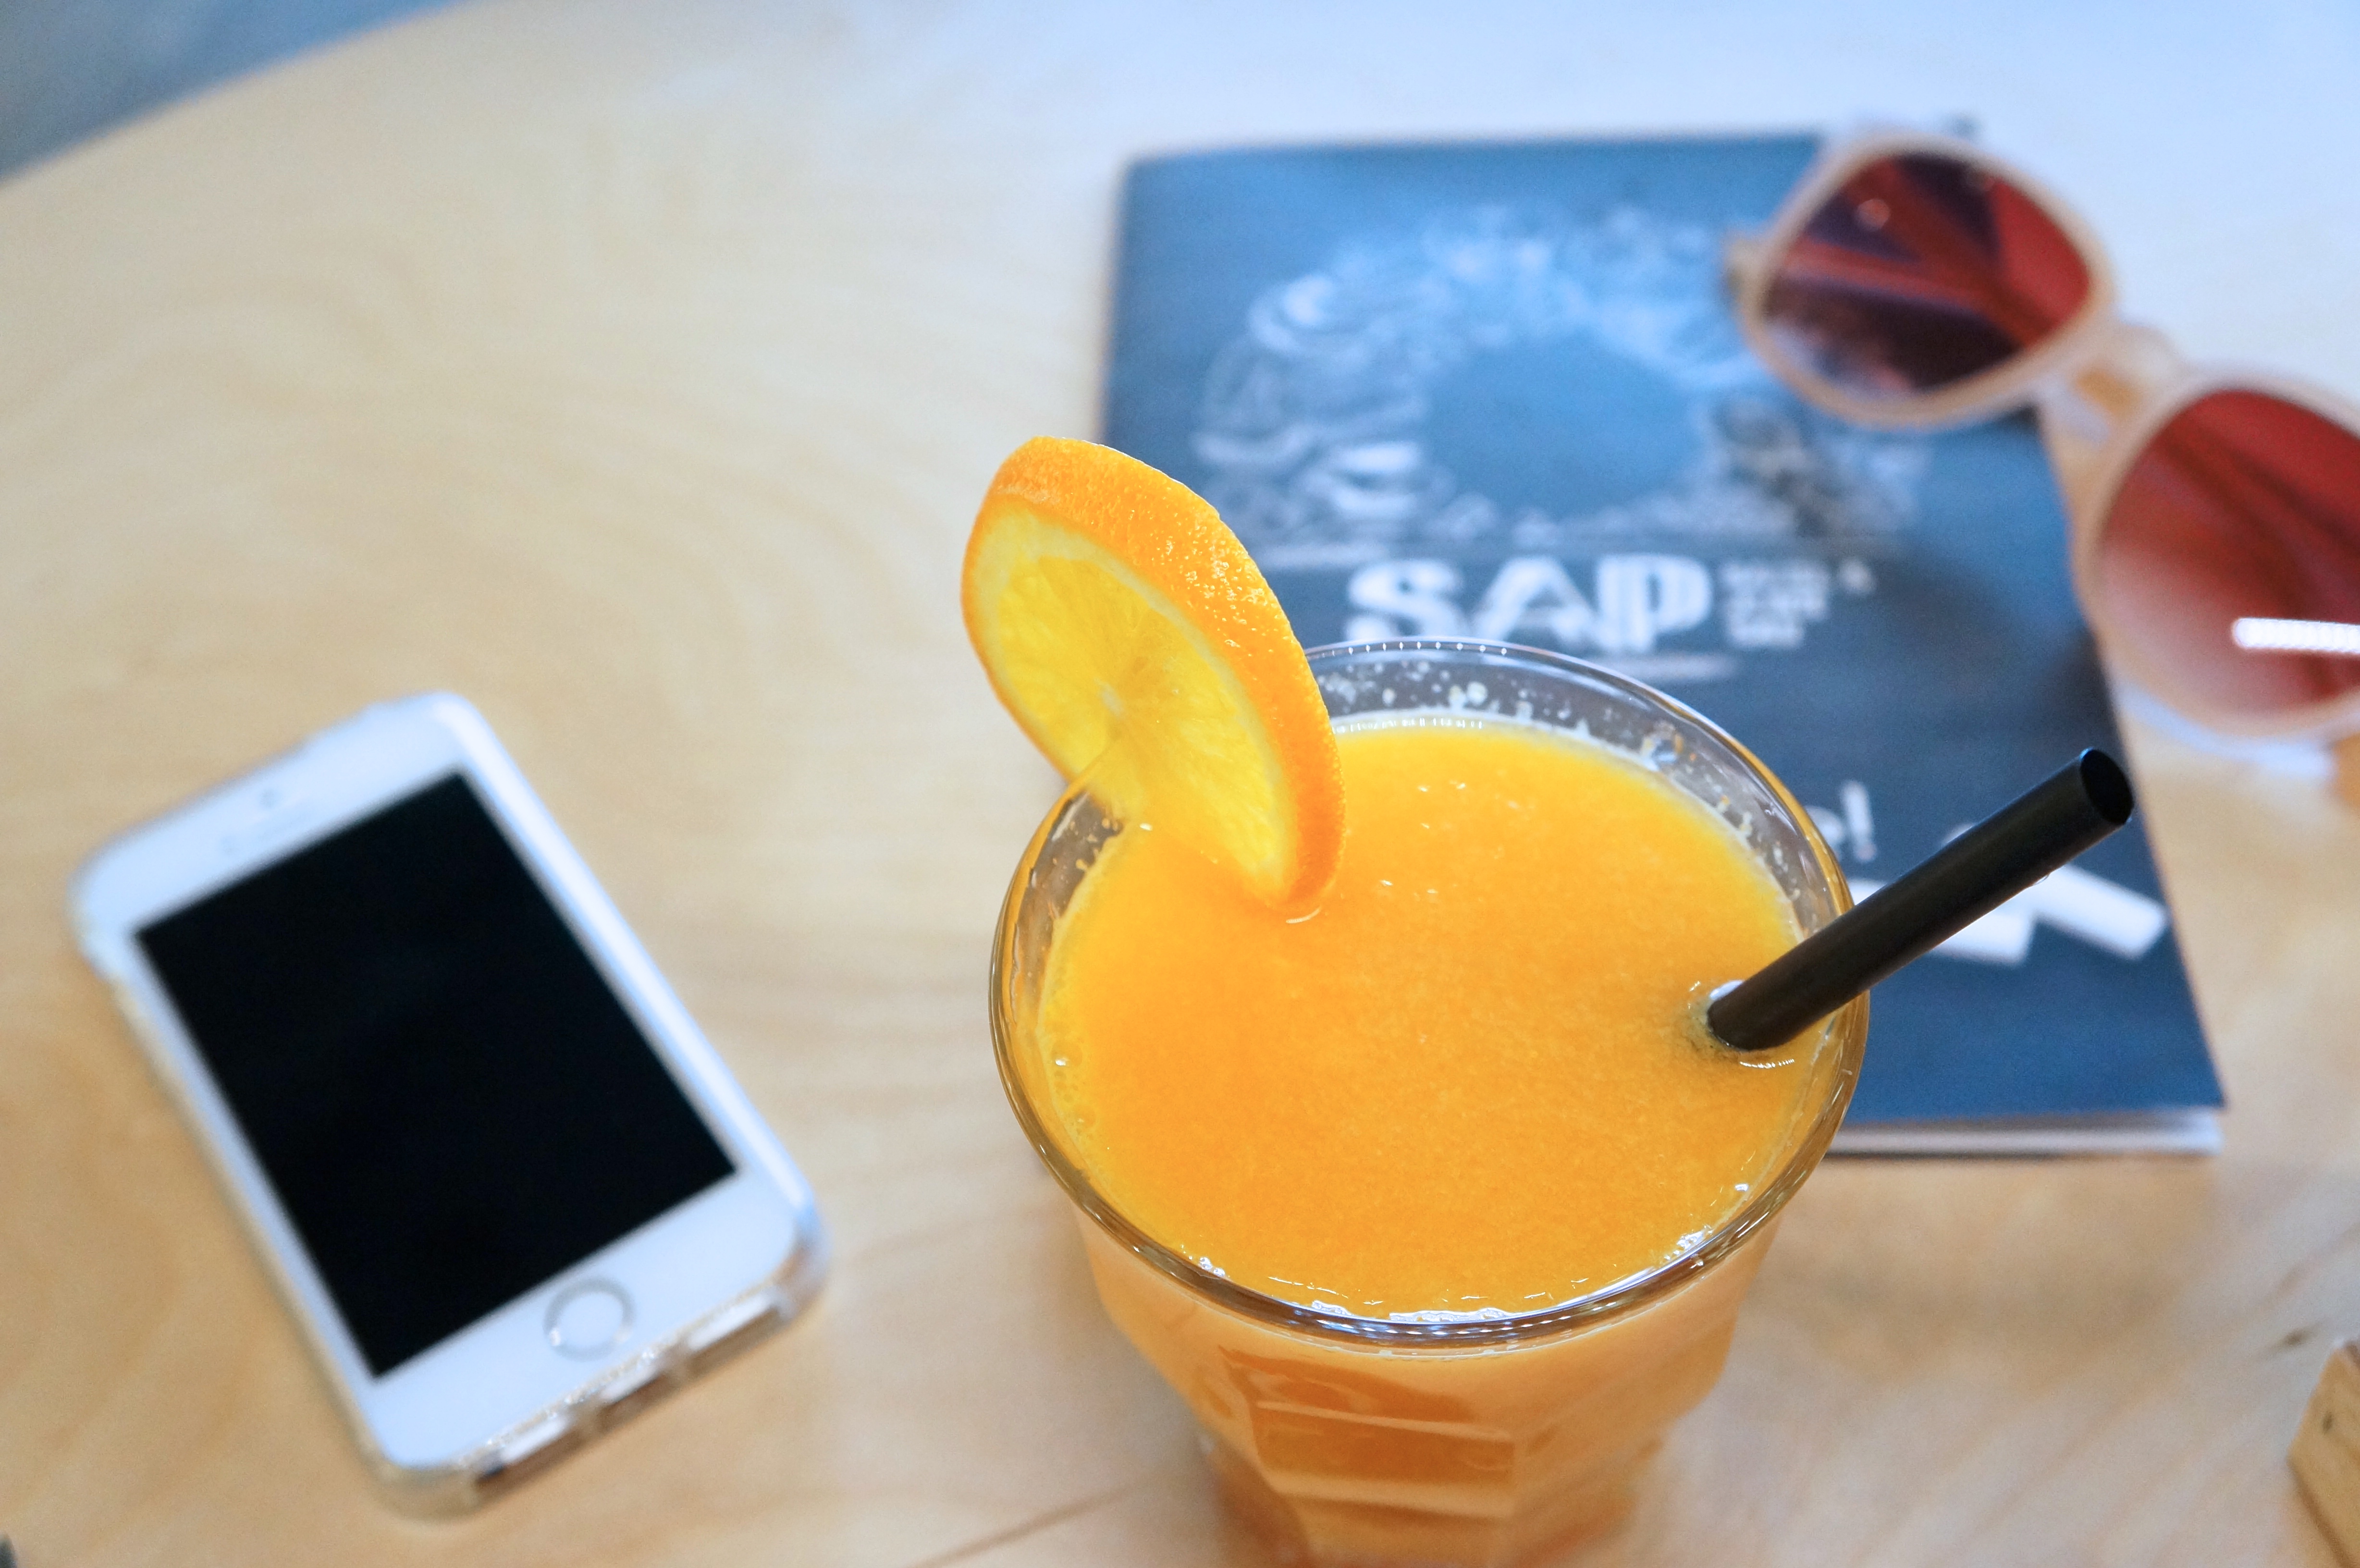 SAP Bagel & juice Bar/ Pic by 1FDLE.